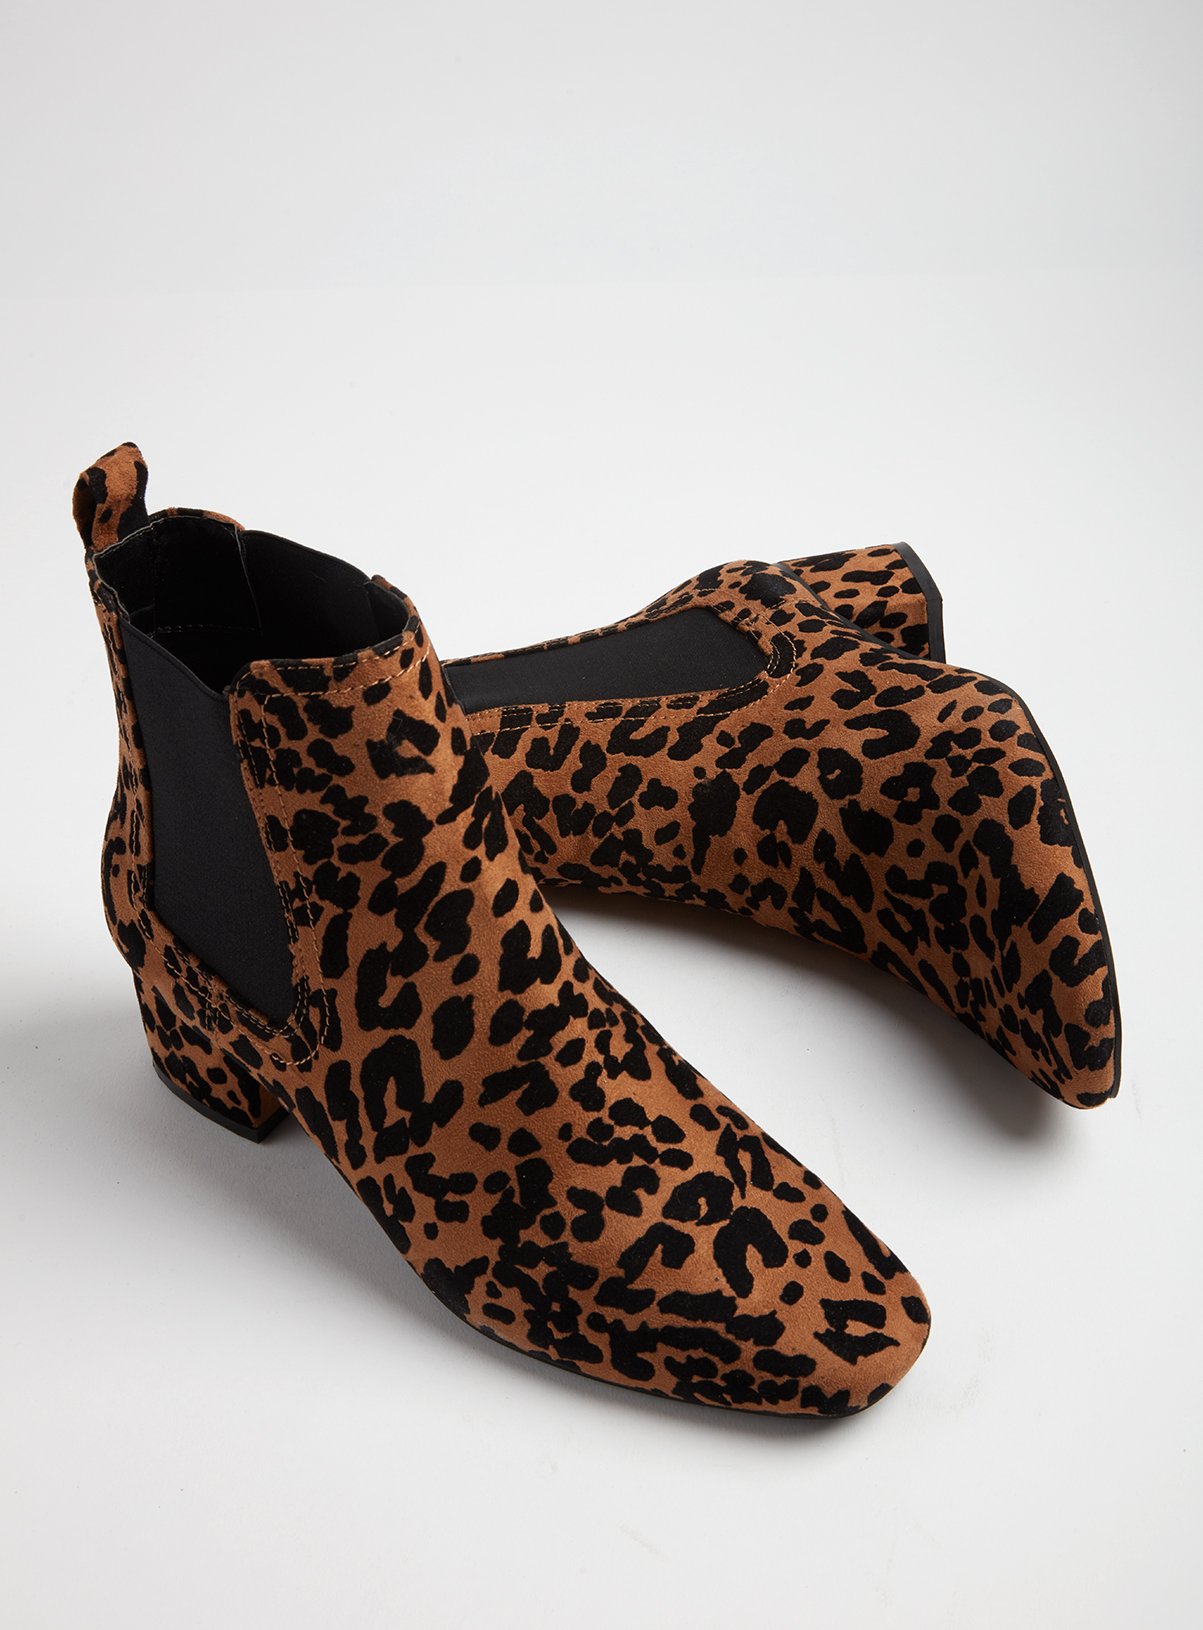 chelsea leopard boots